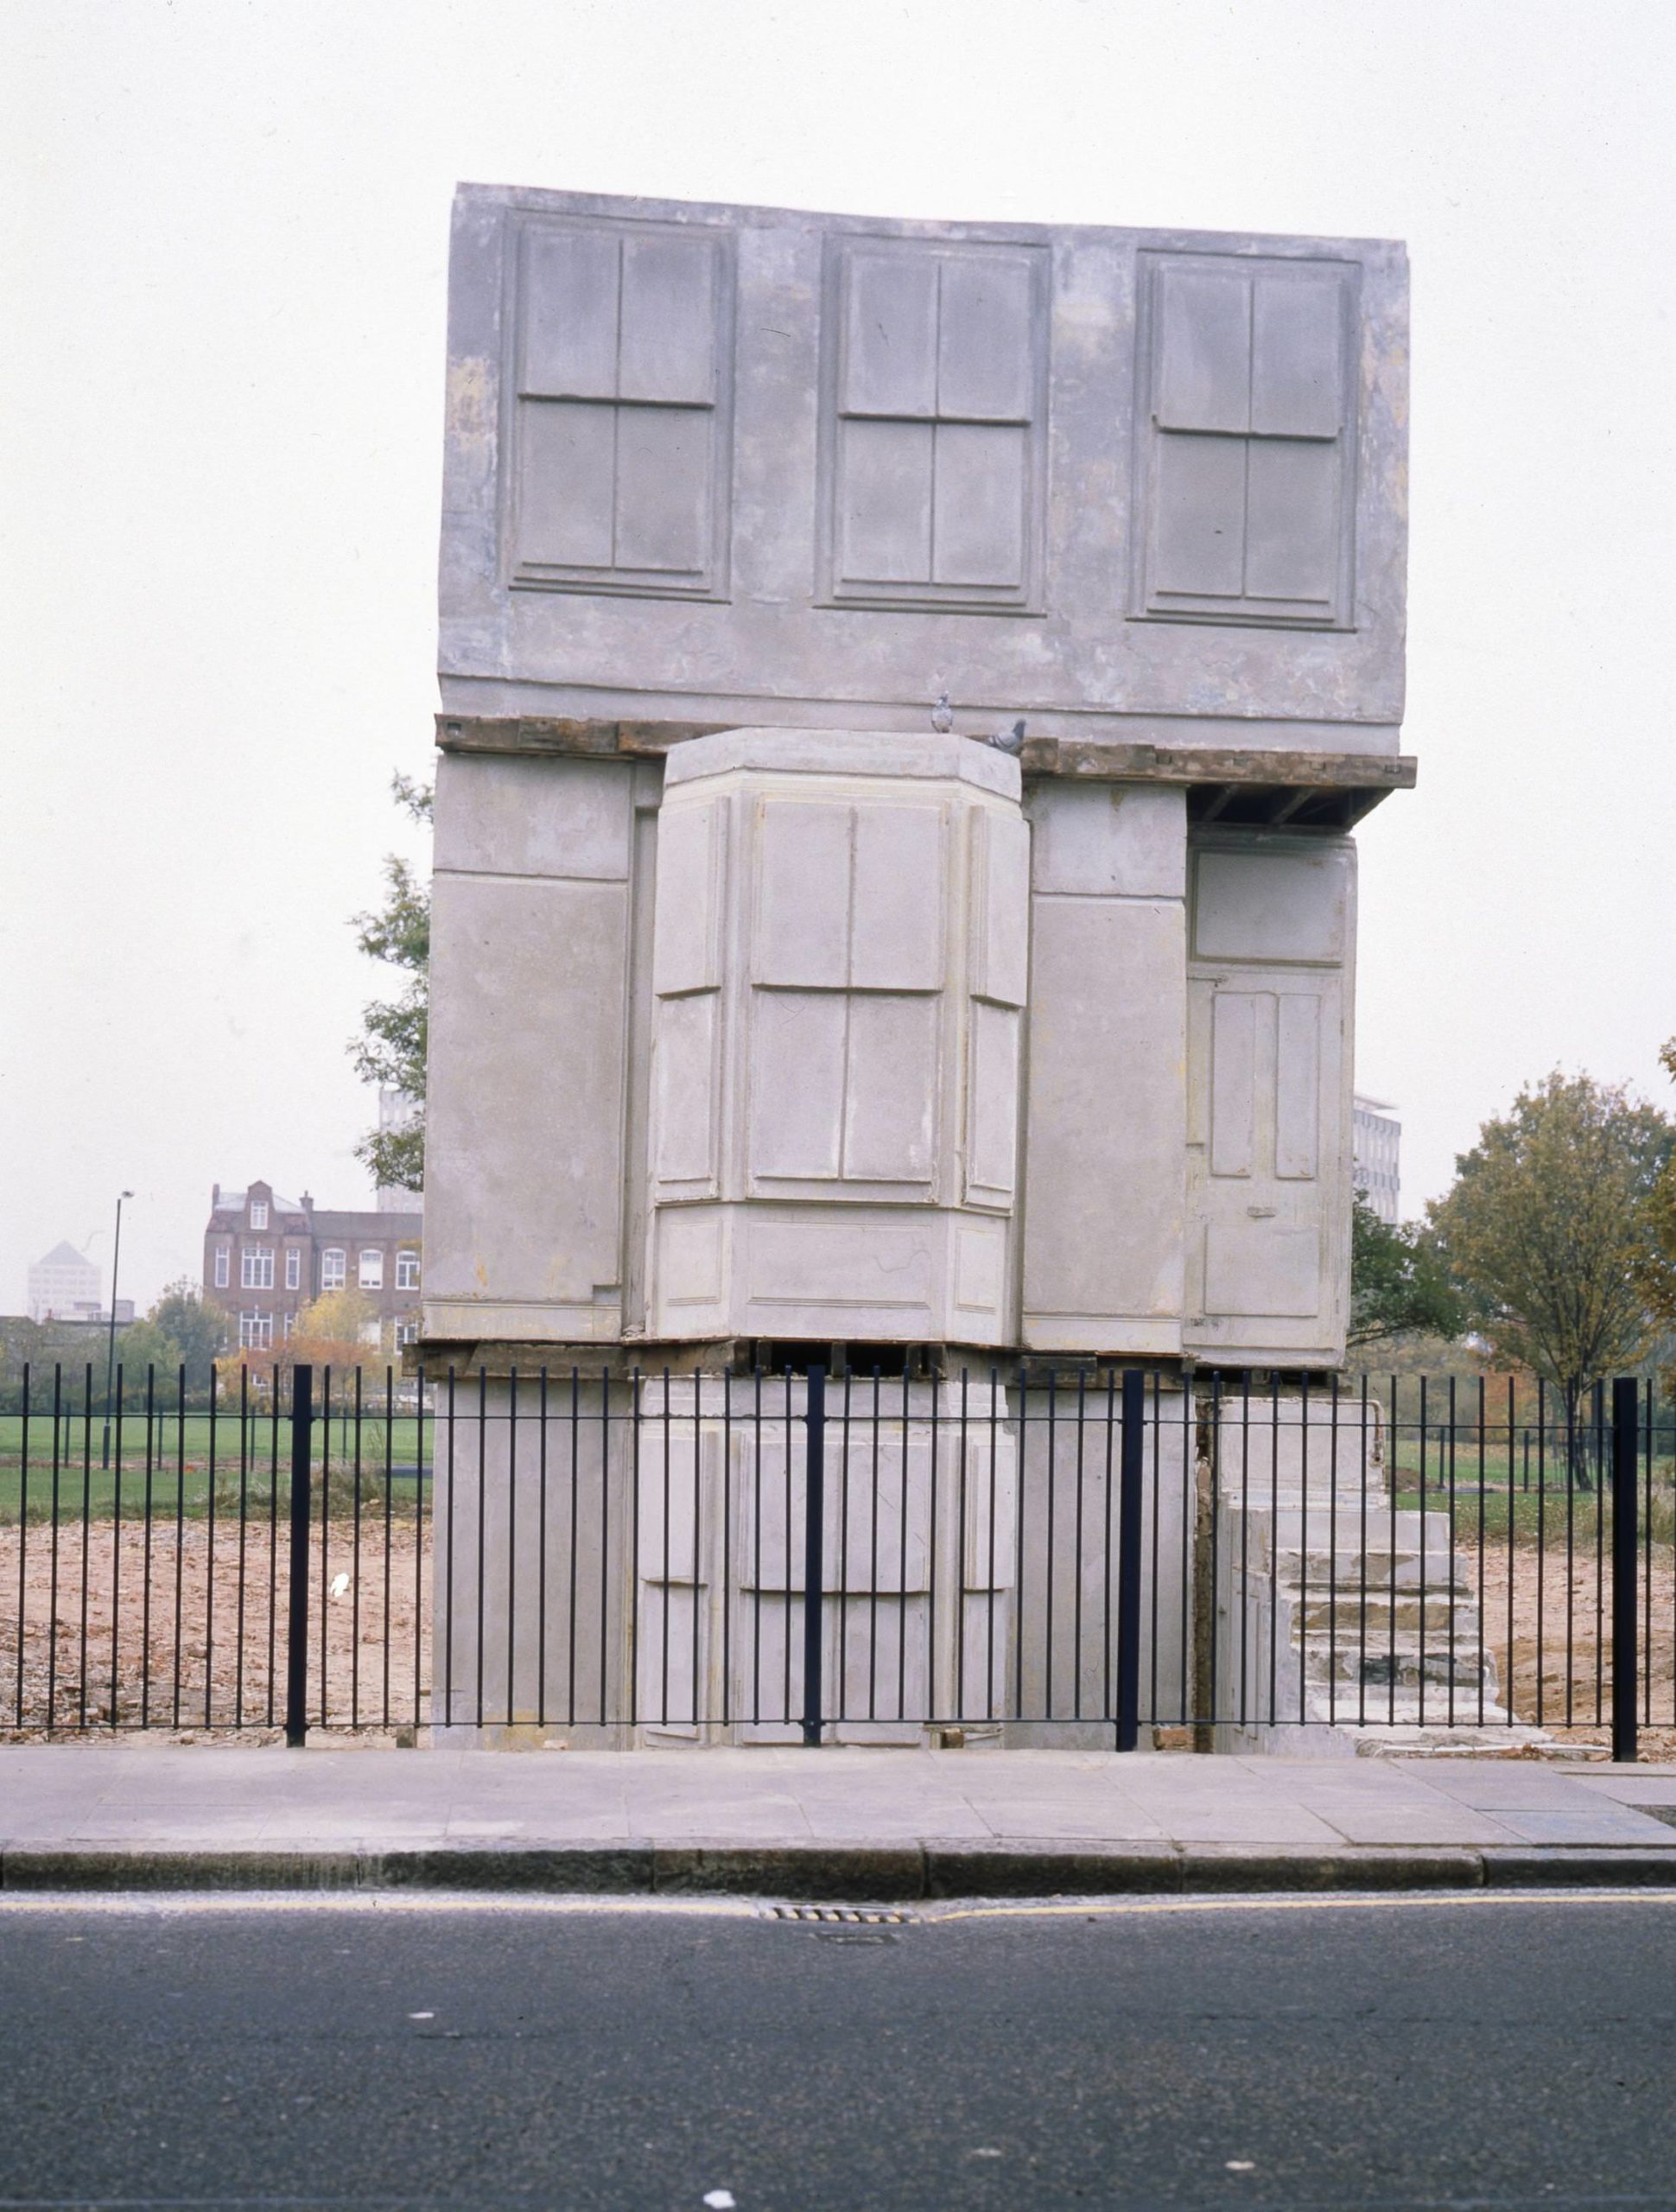 House, 1993 by Rachel Whiteread